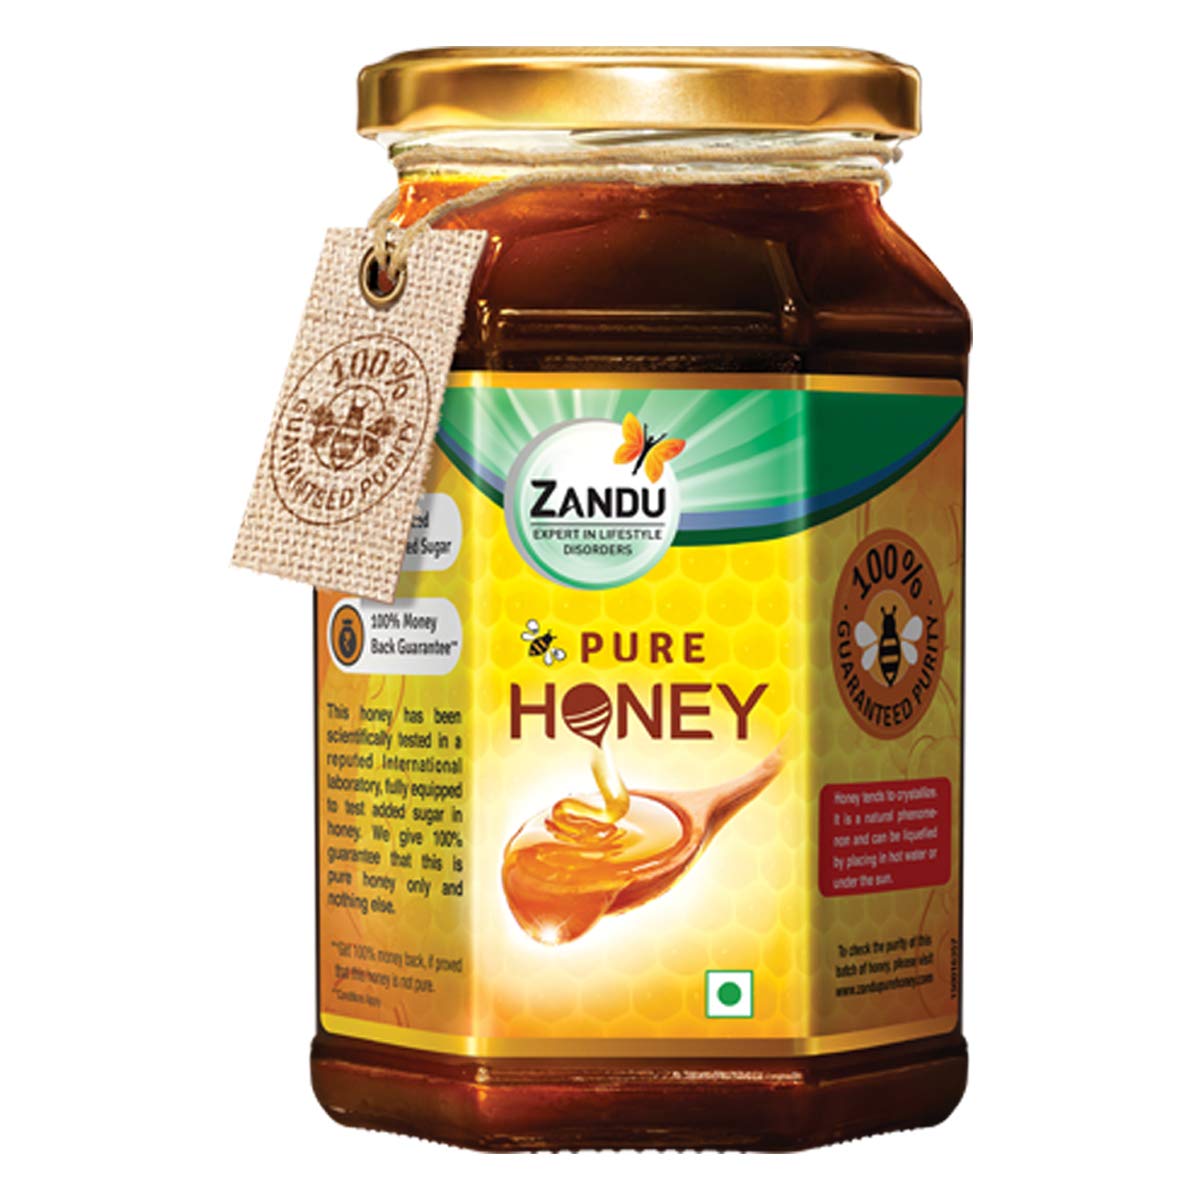 Zindu Pure Honey 500g